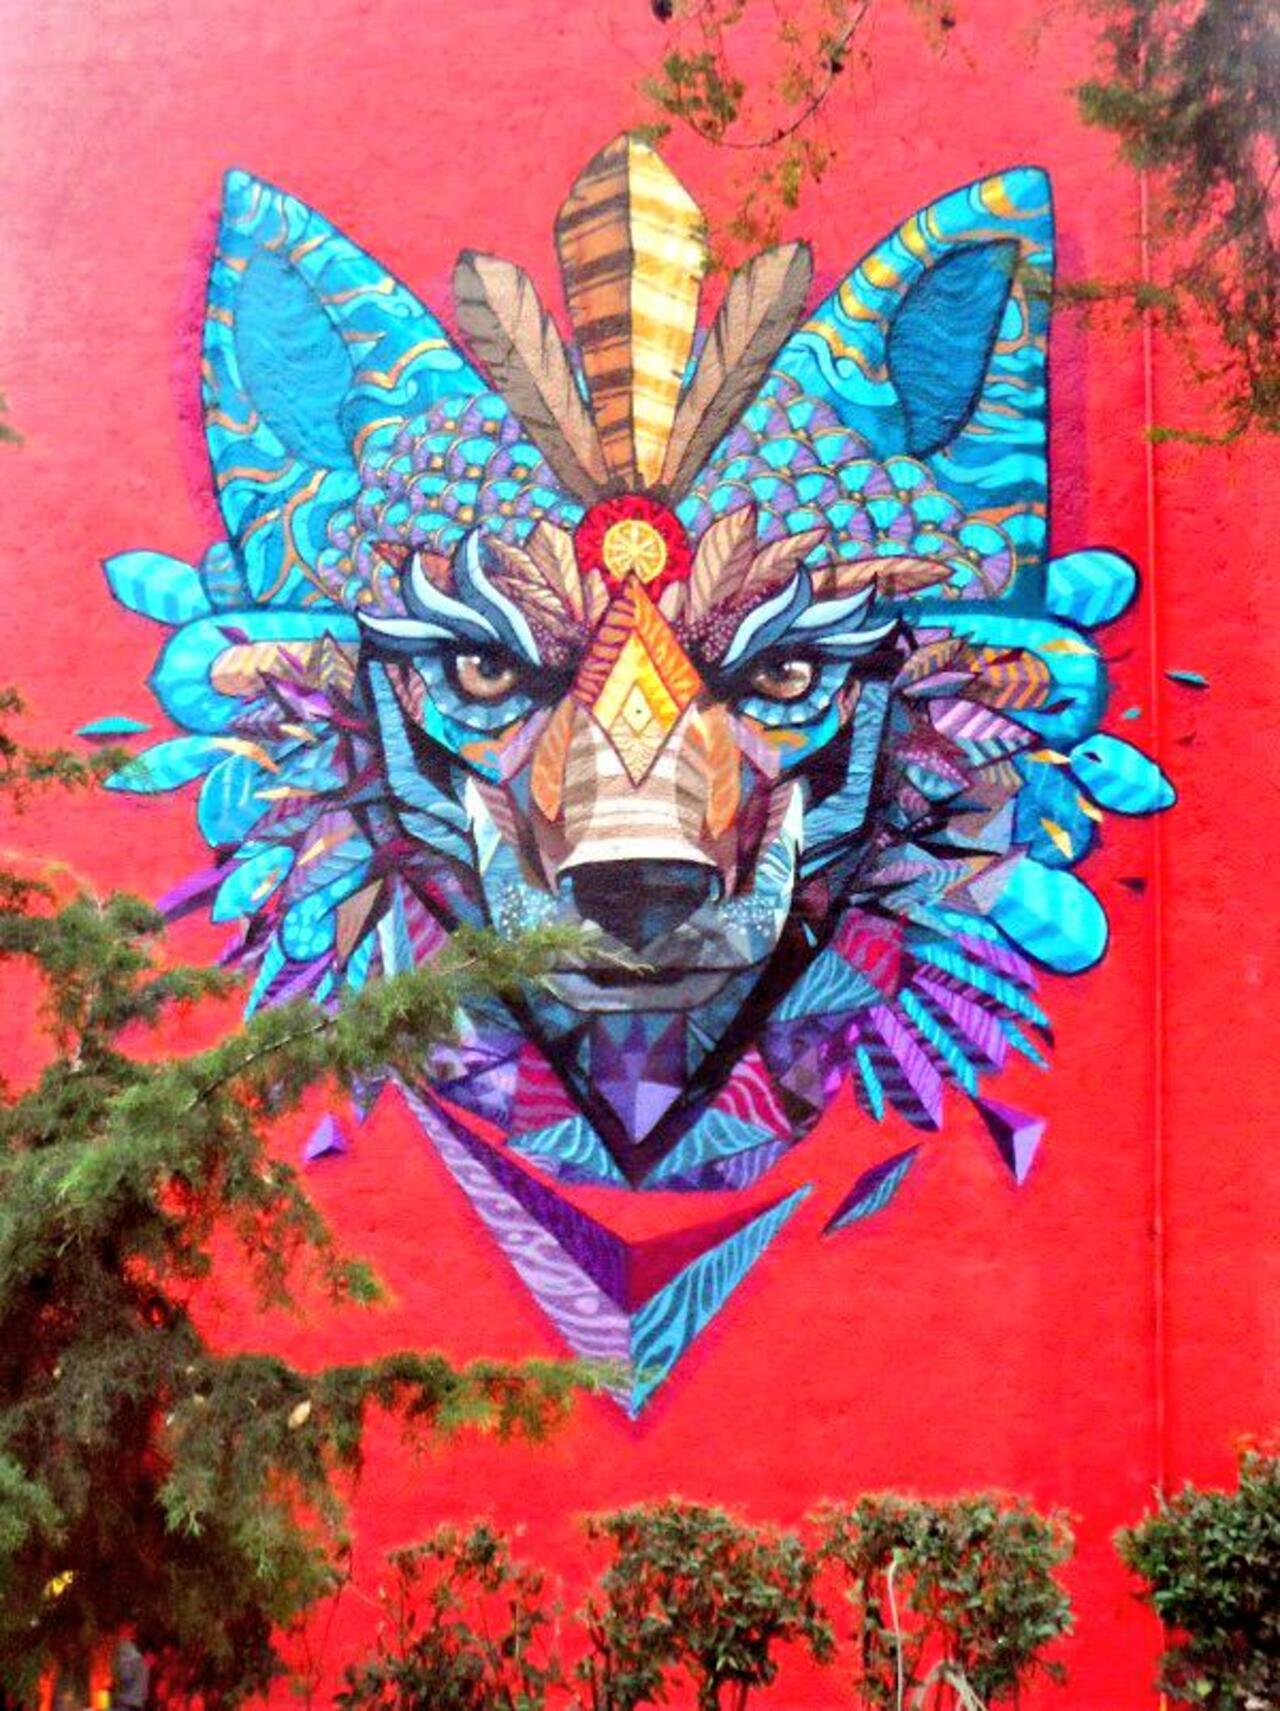 “@Pitchuskita: Farid Rueda
Mexico
#streetart #art #graffiti #mural http://t.co/kv9lHN81XT”